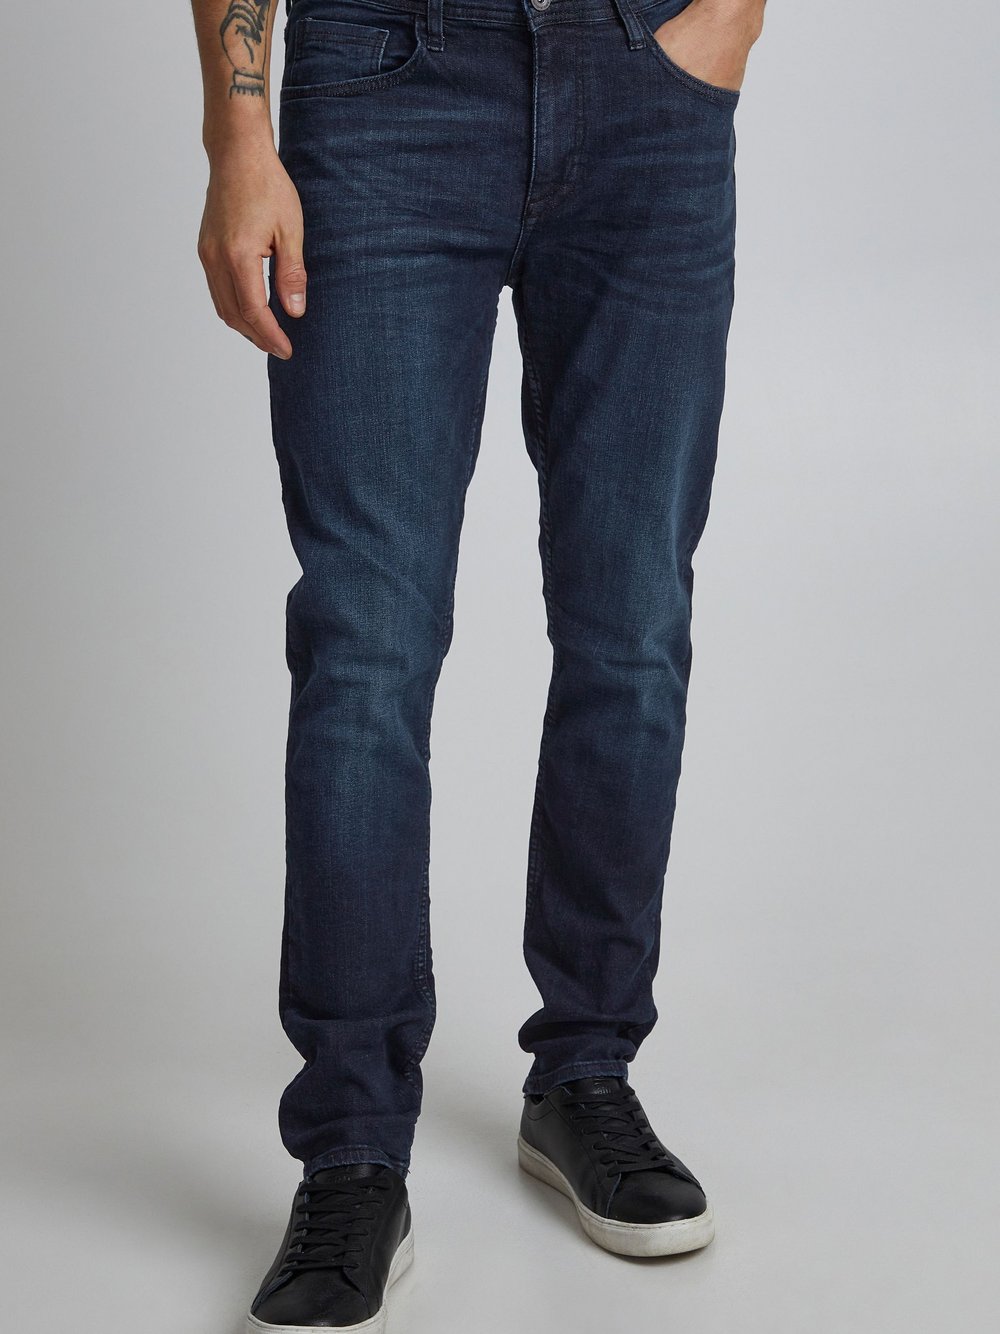 BLEND 5-Pocket-Jeans Herren denim, 33-32